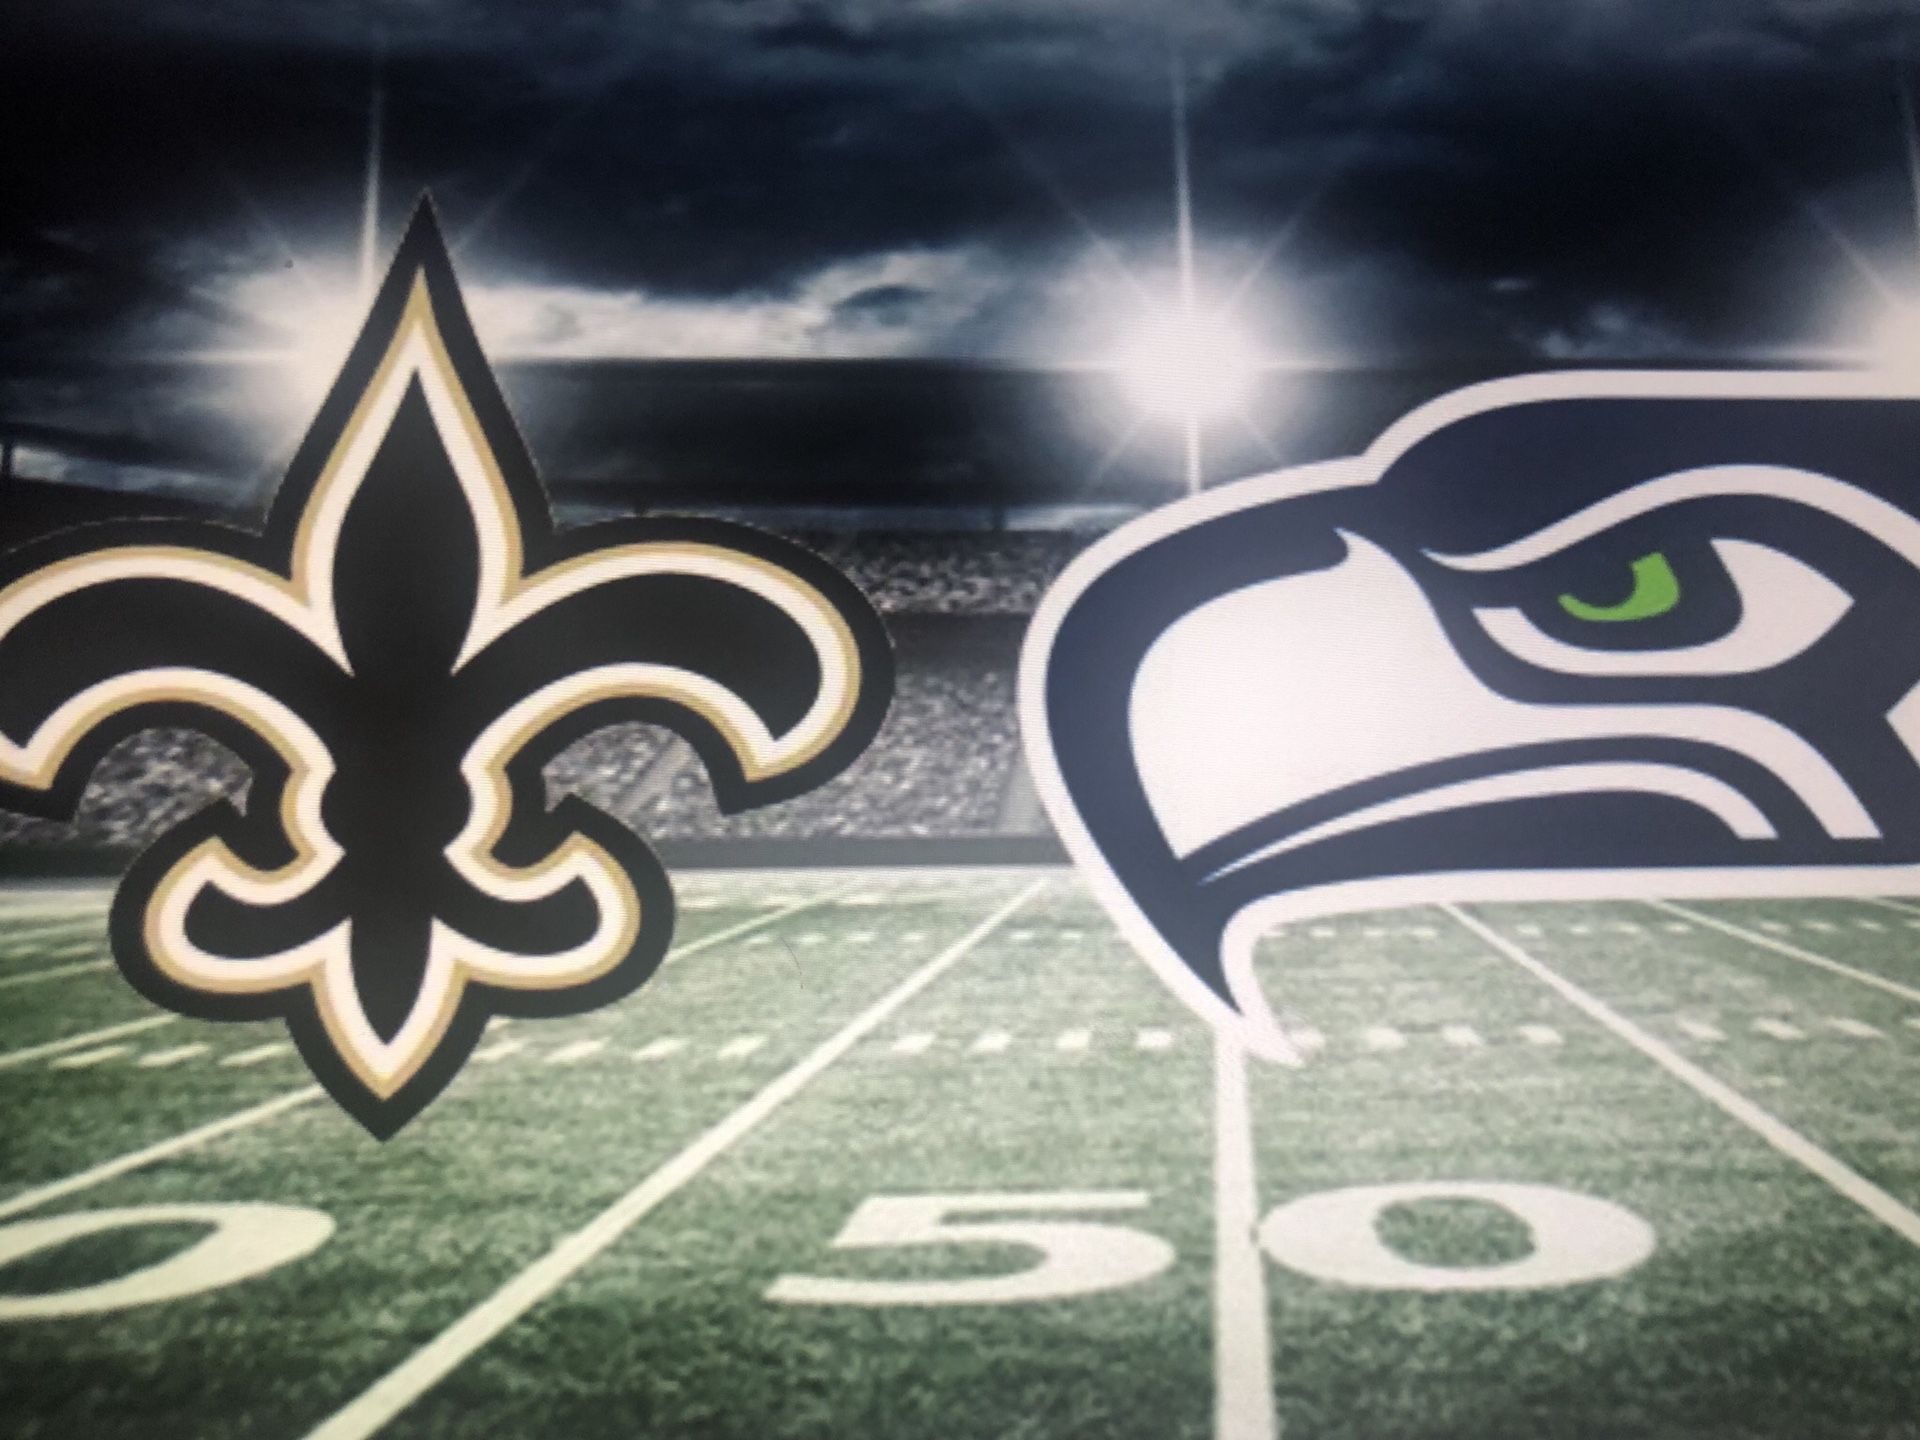 Seahawks vs New Orleans Saints 9/22/19 40 yard line club seats